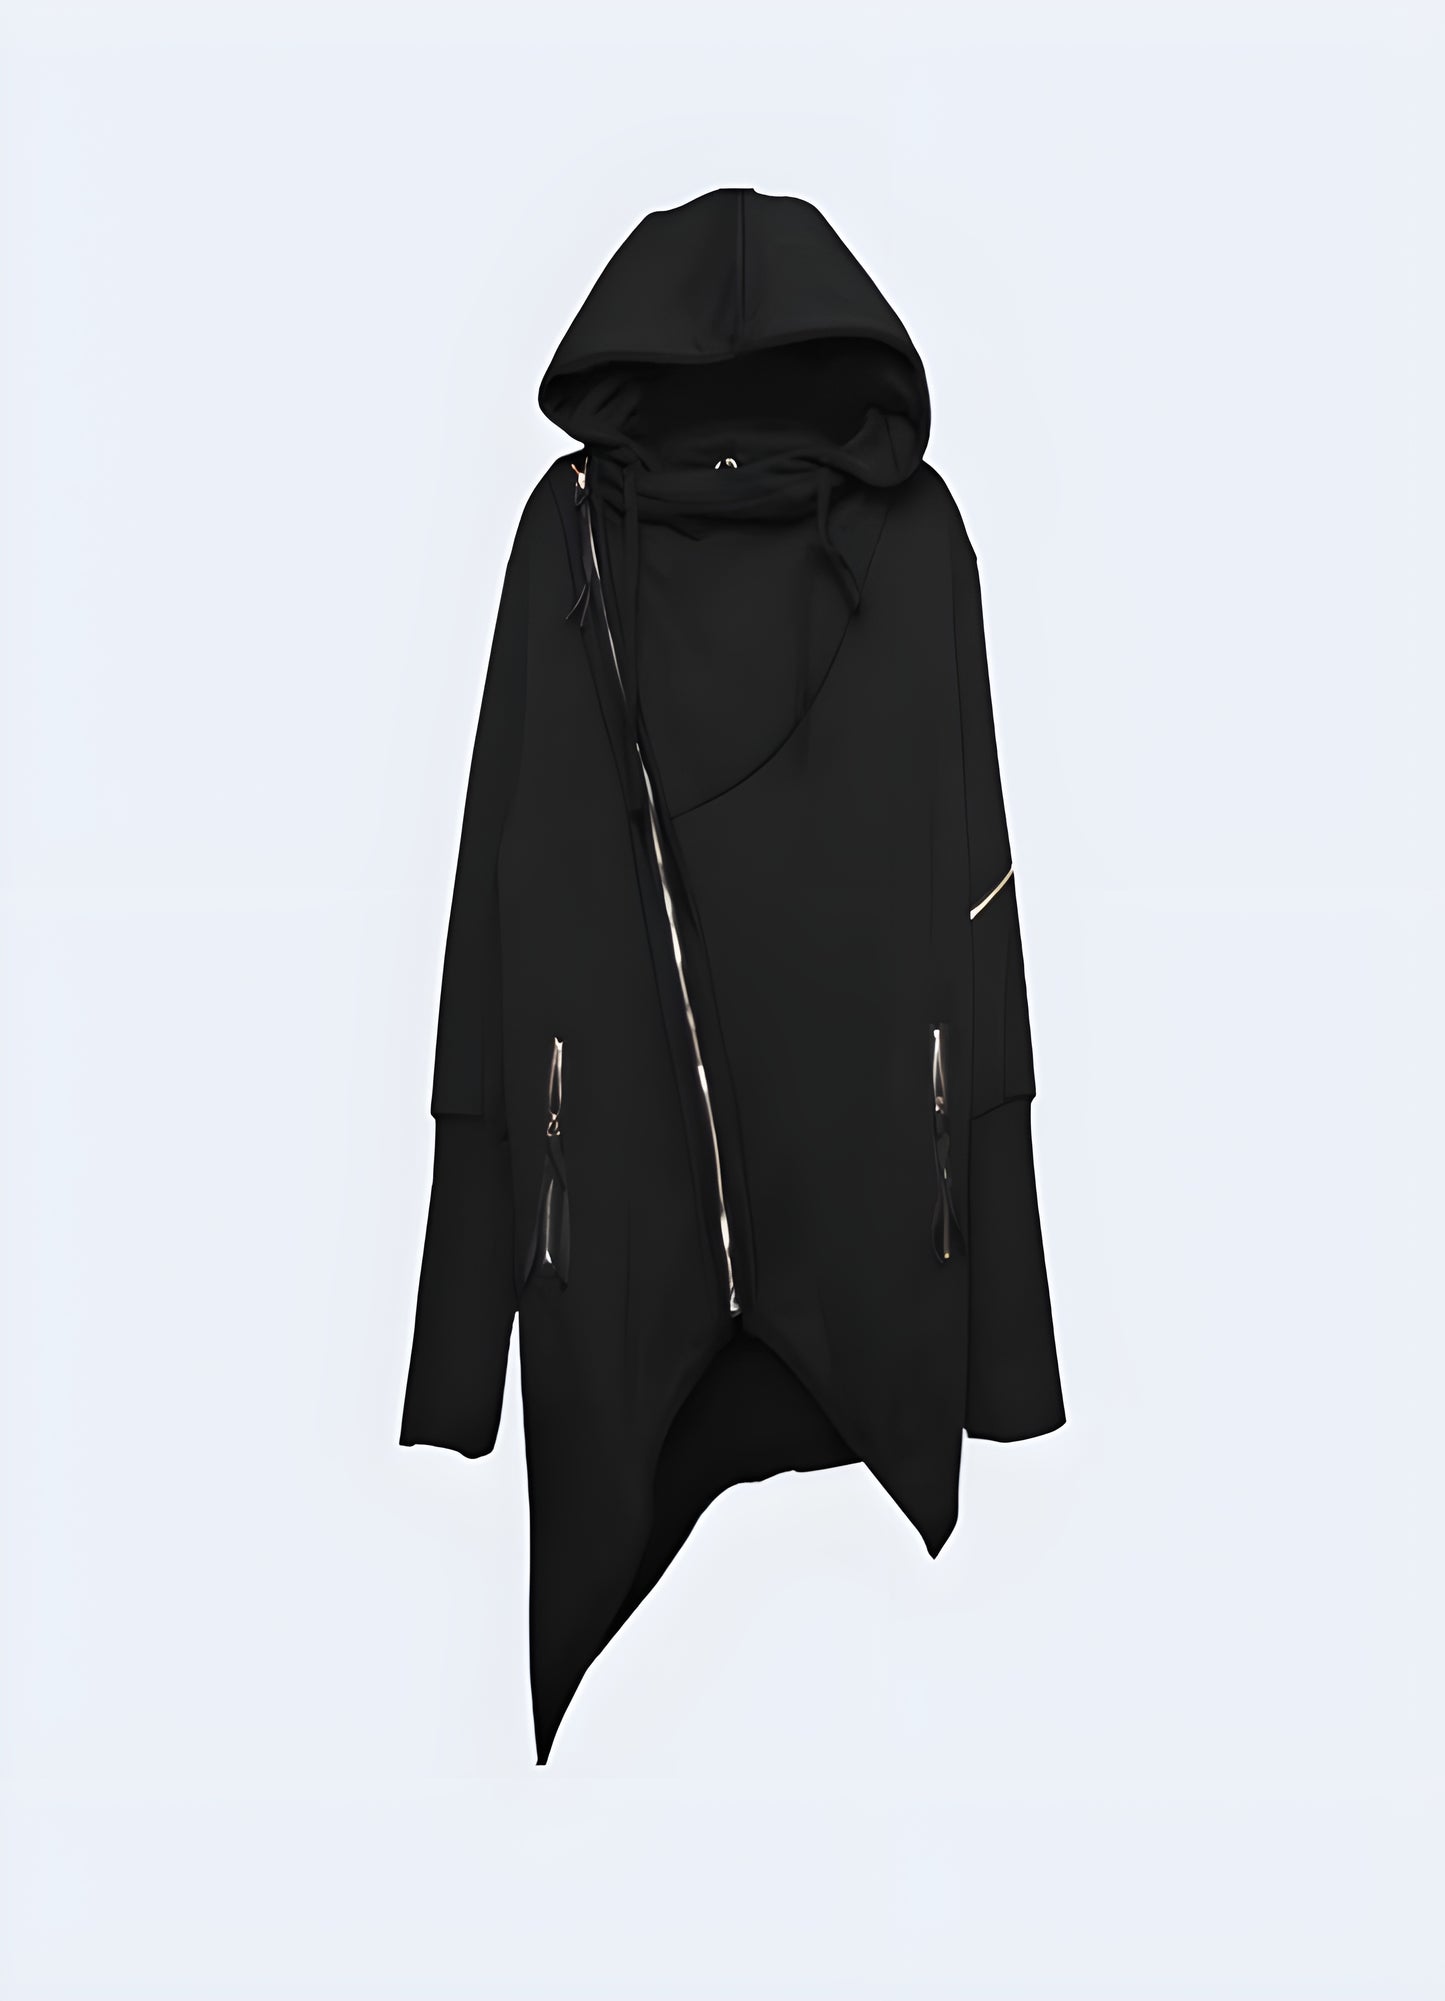 Black lightweight ninja jacket hoodie.